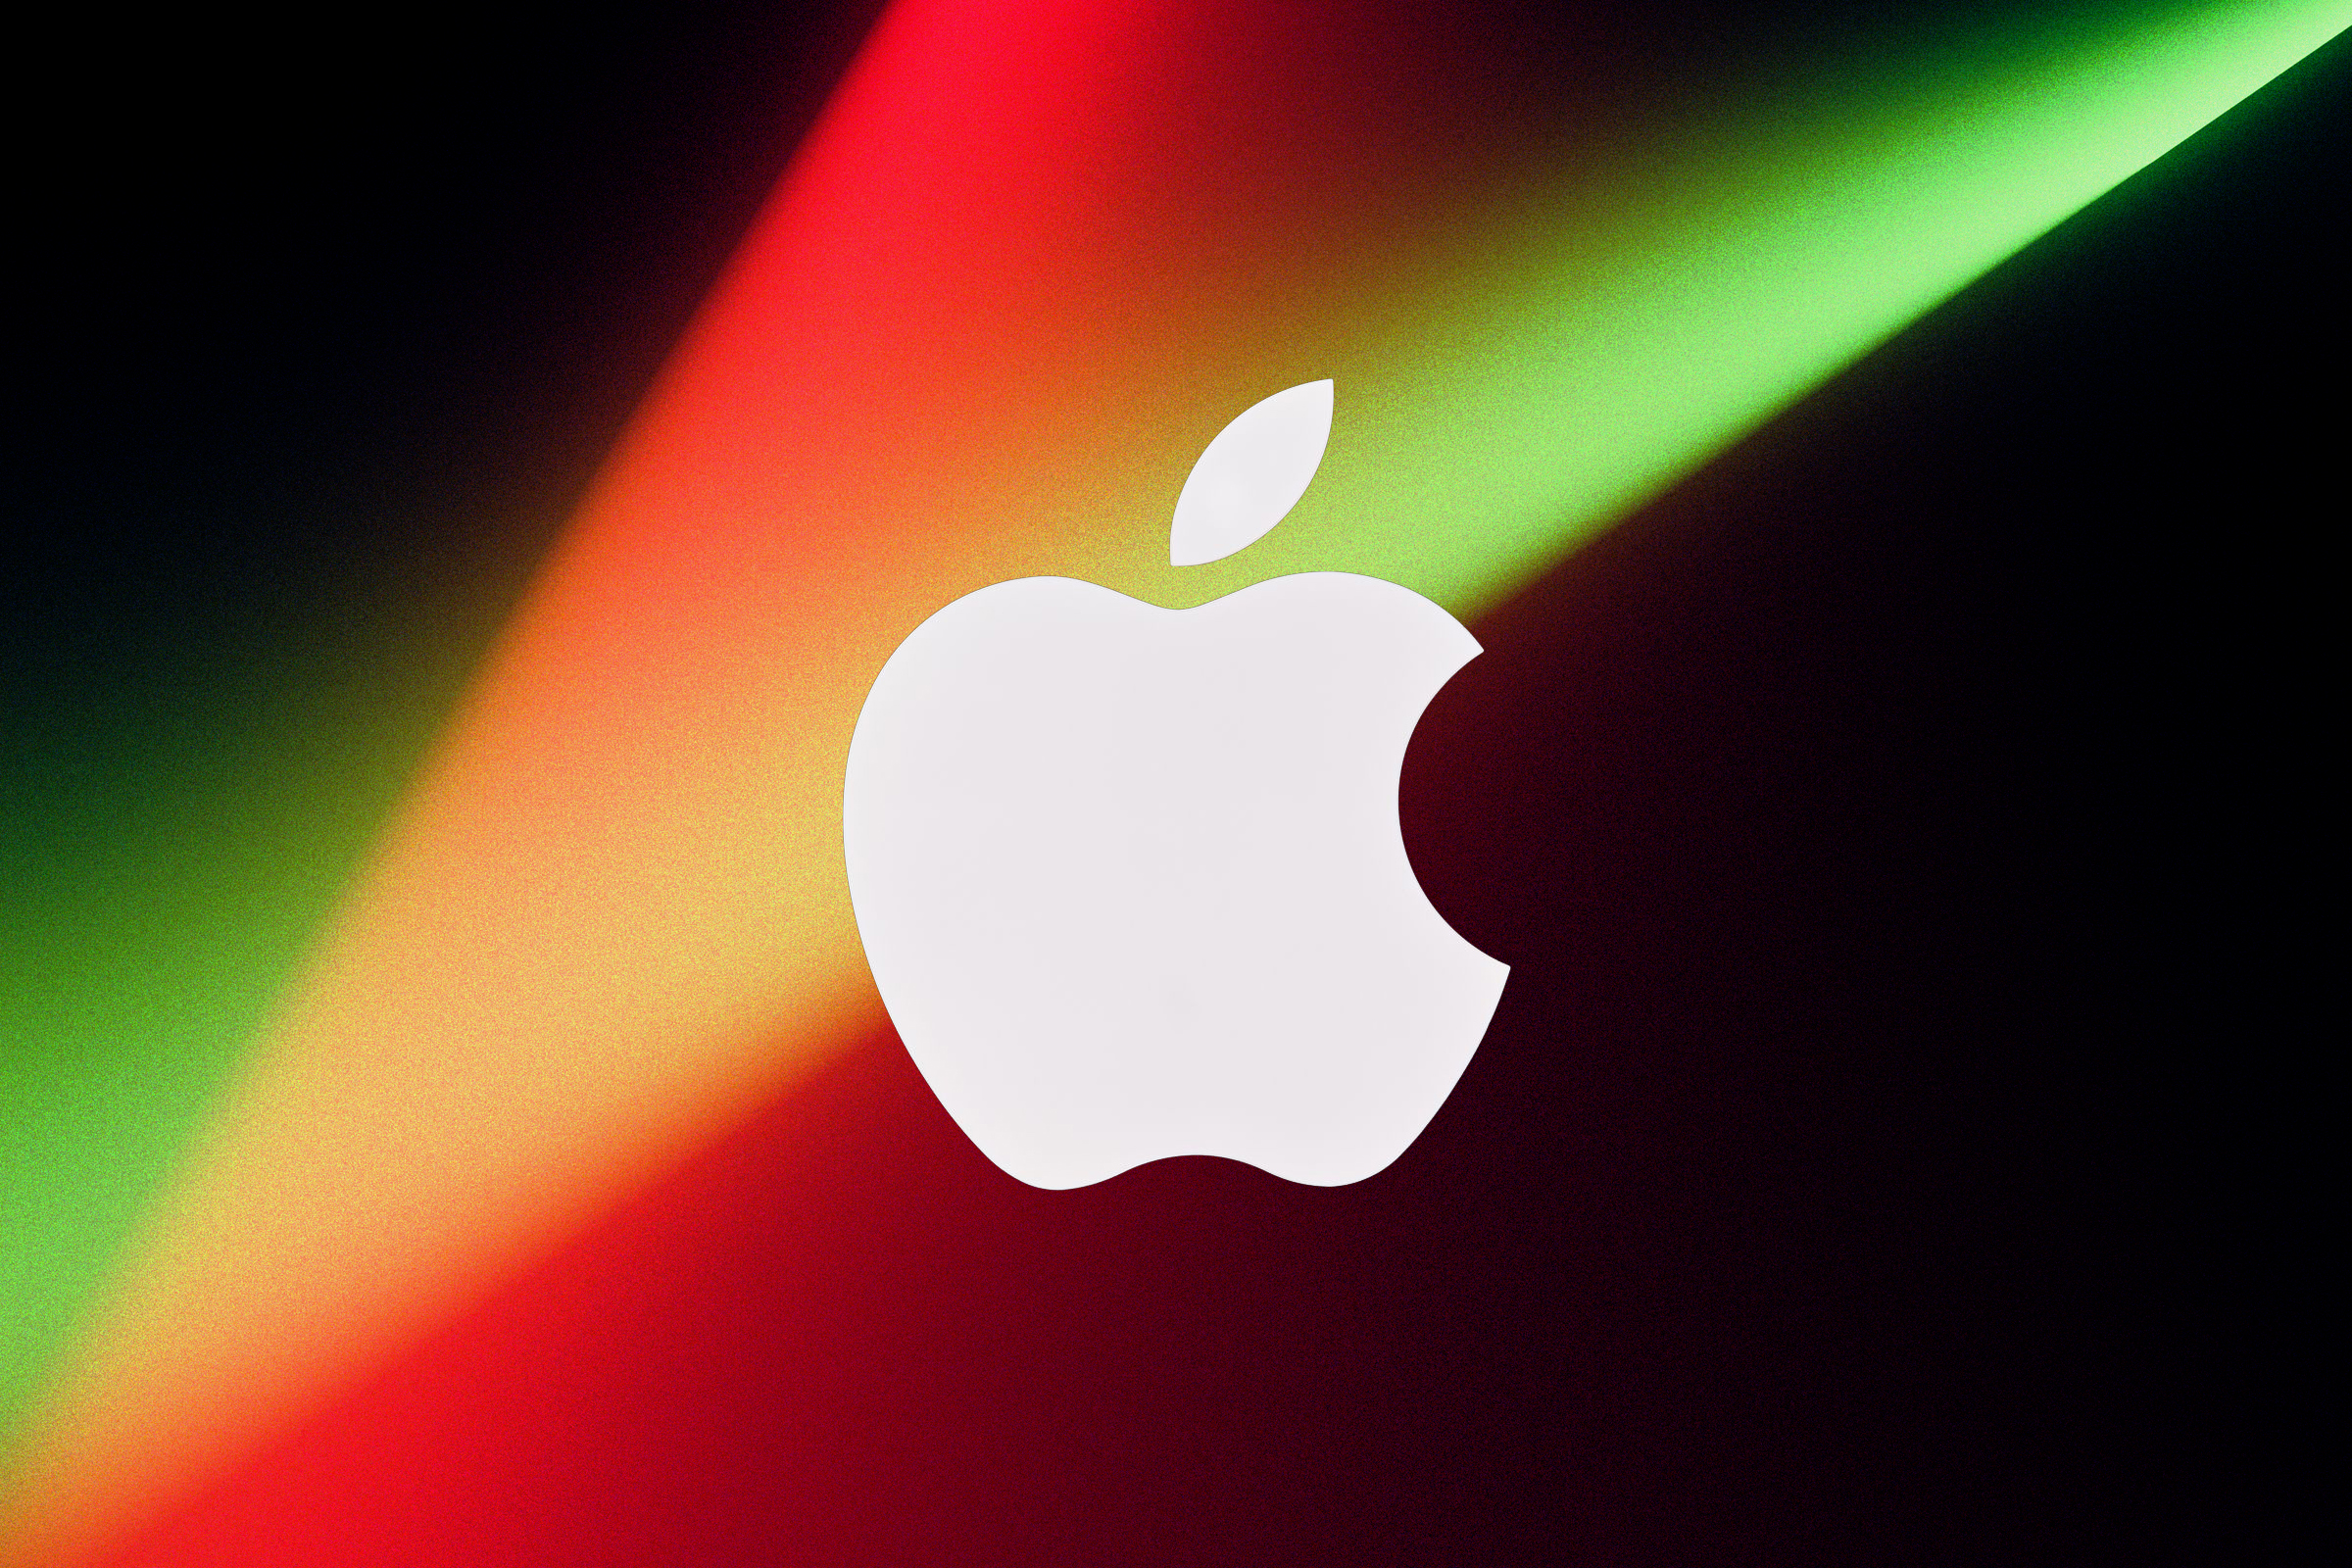 Download Apple's Unity Lights wallpaper here